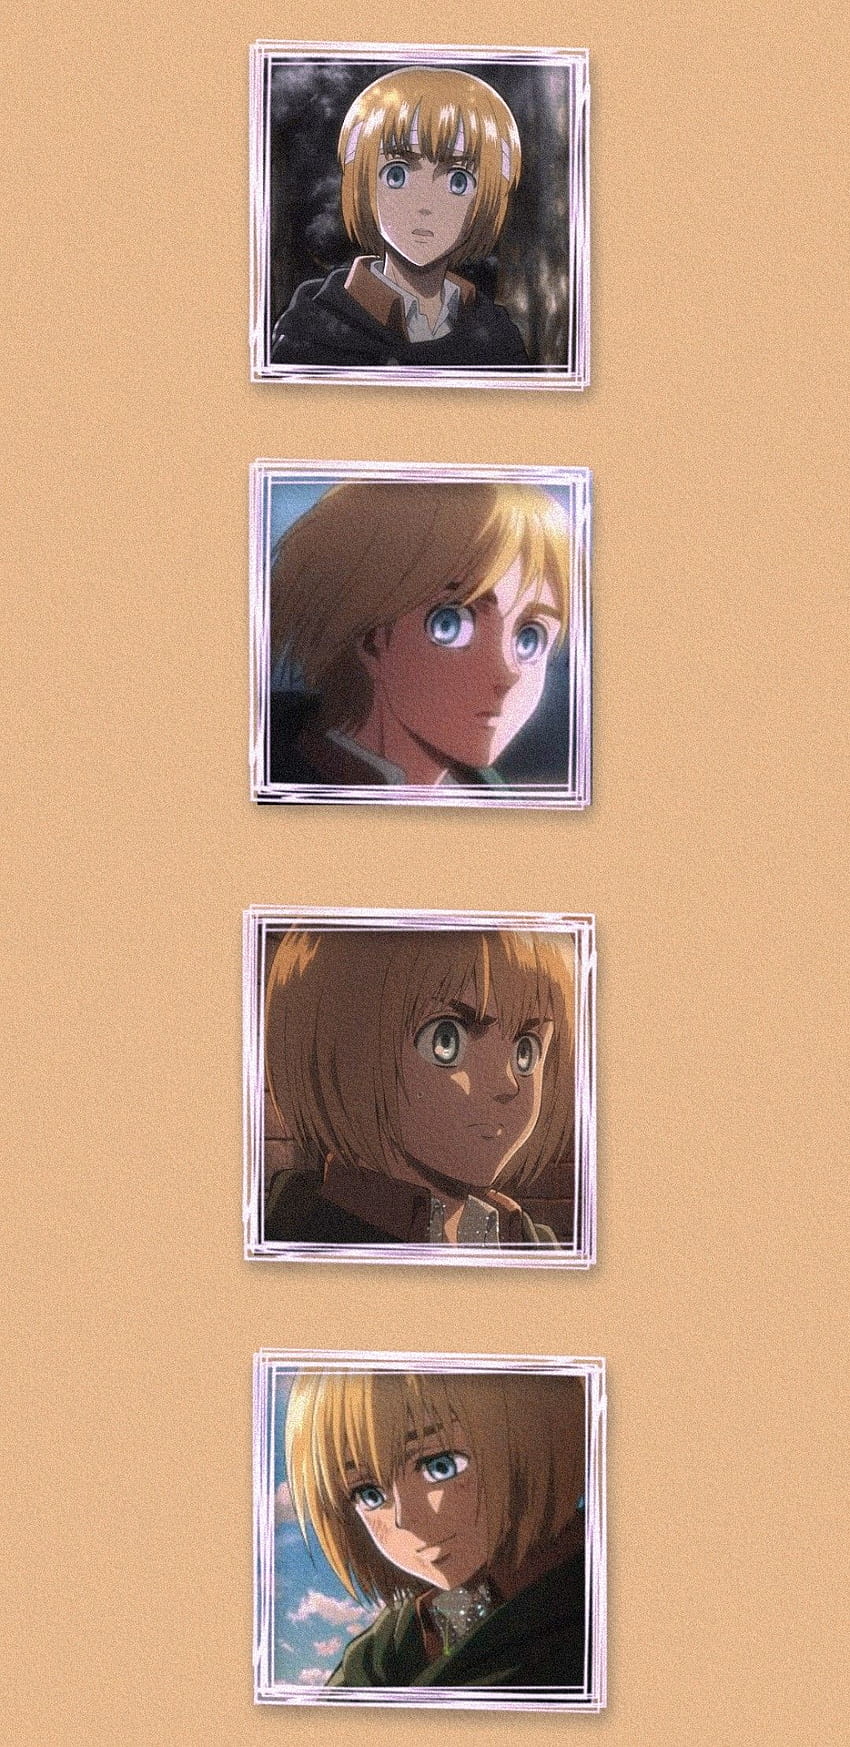 Armin Season 4 Wallpapers  Wallpaper Cave